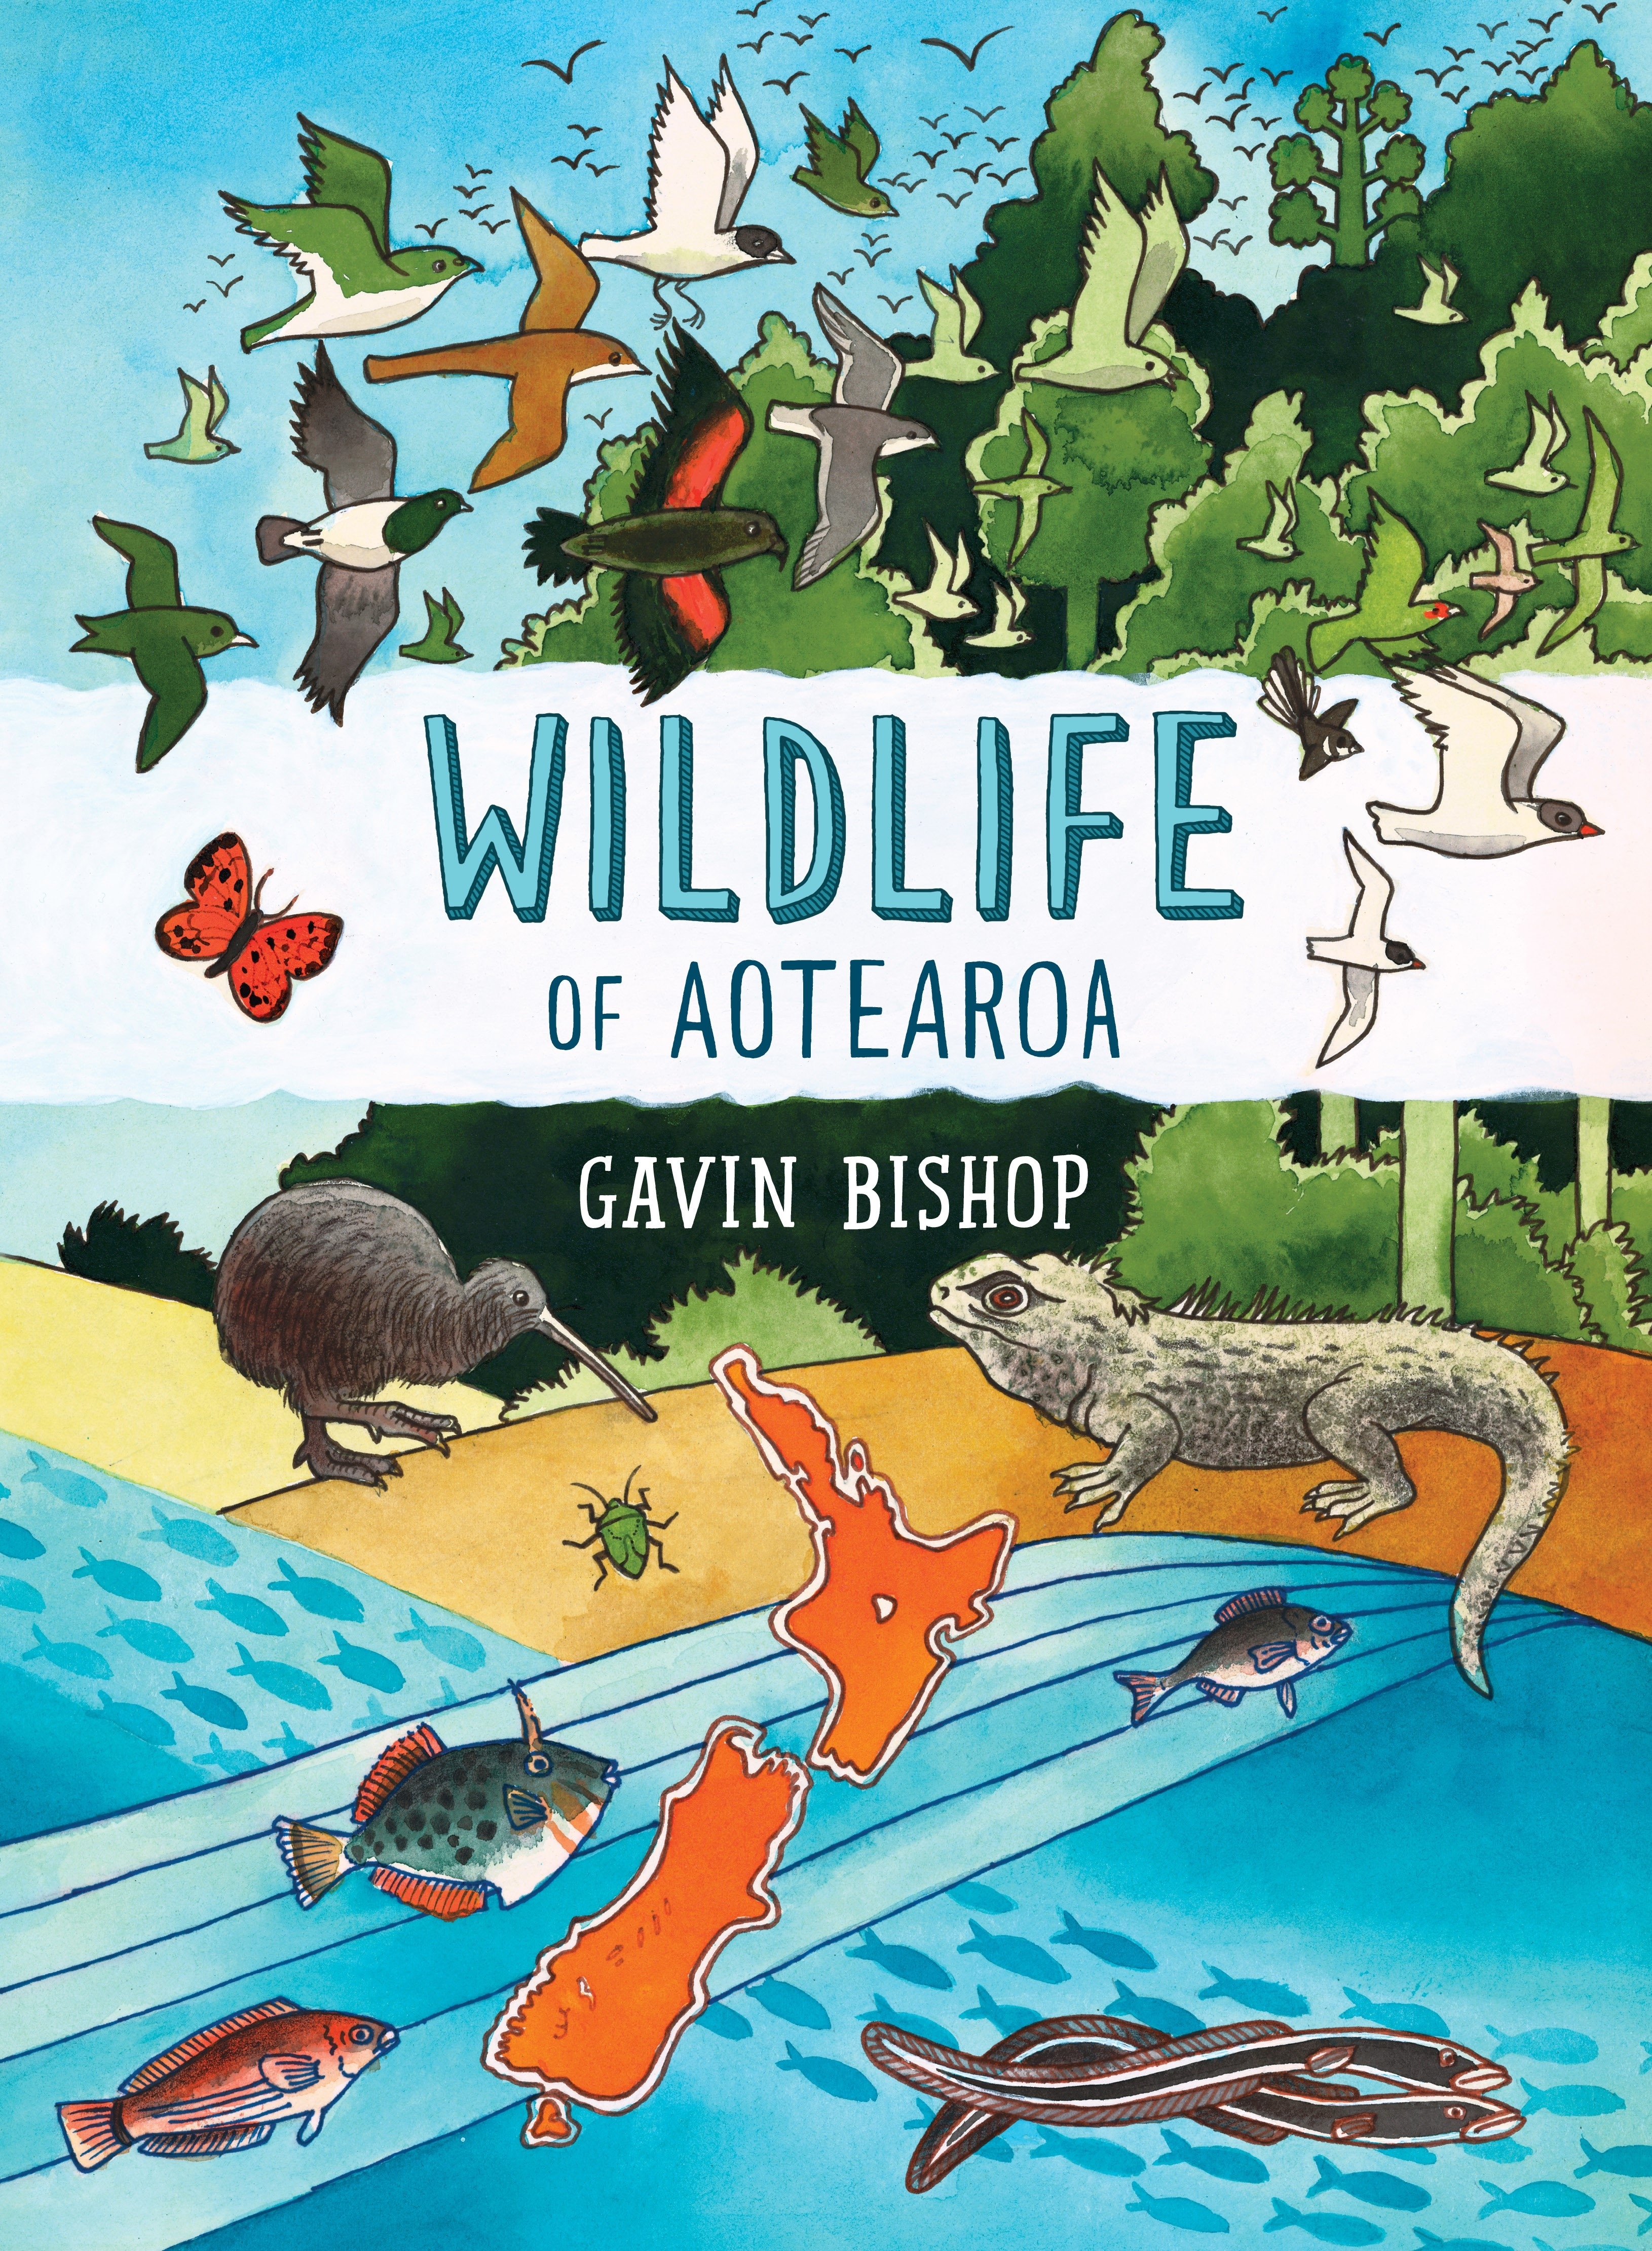 Wildlife of Aotearoa by Gavin Bishop - Penguin Books New Zealand